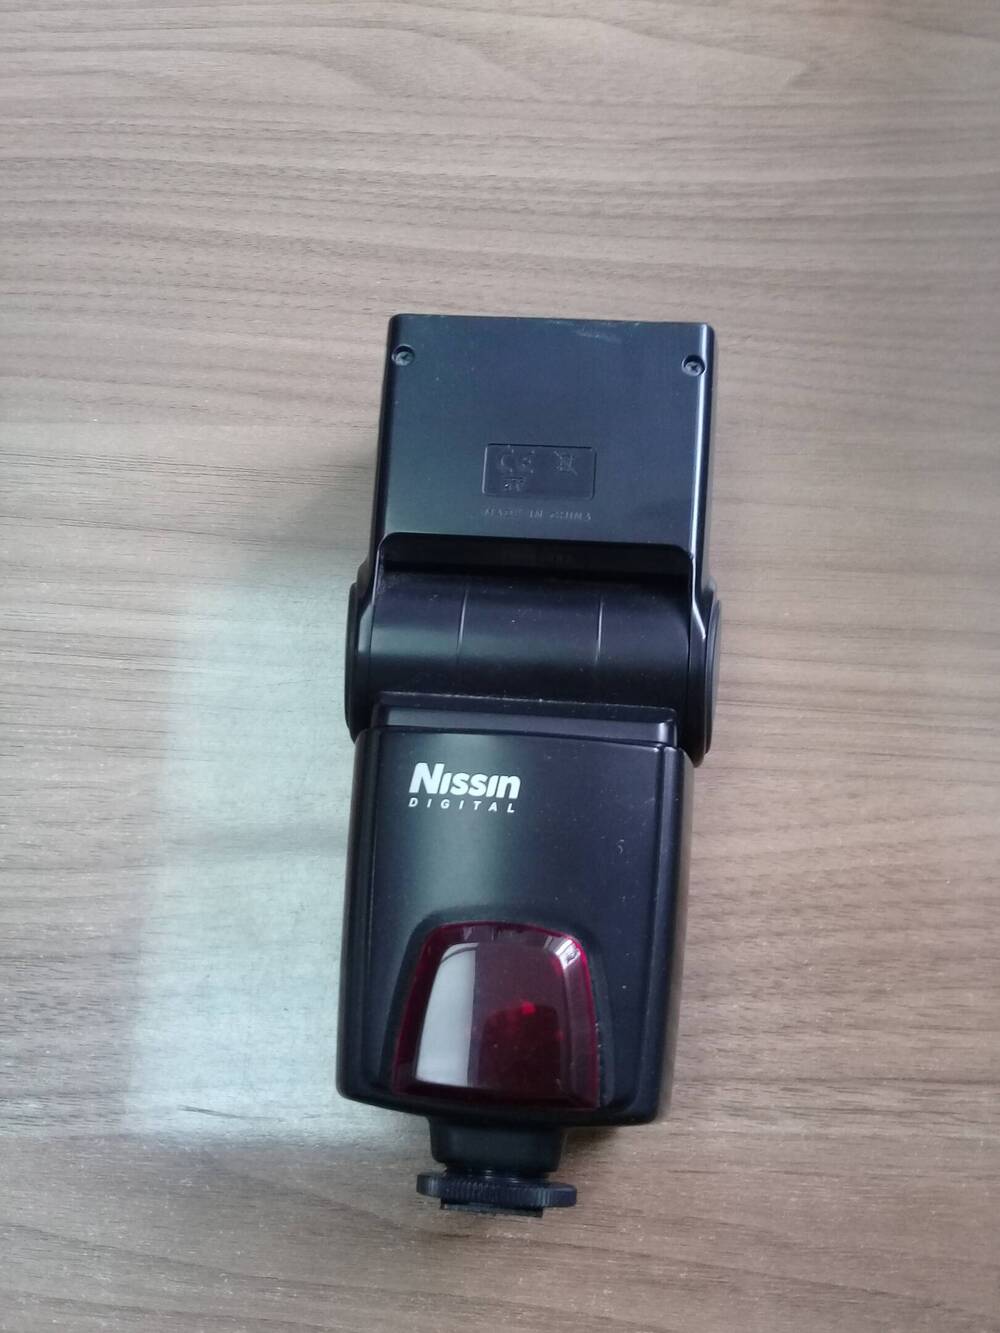 Фотовспышка. Nissin digital speedlite Di 622 zoom 24-105 mm for Canon ETTL Digital Cameras